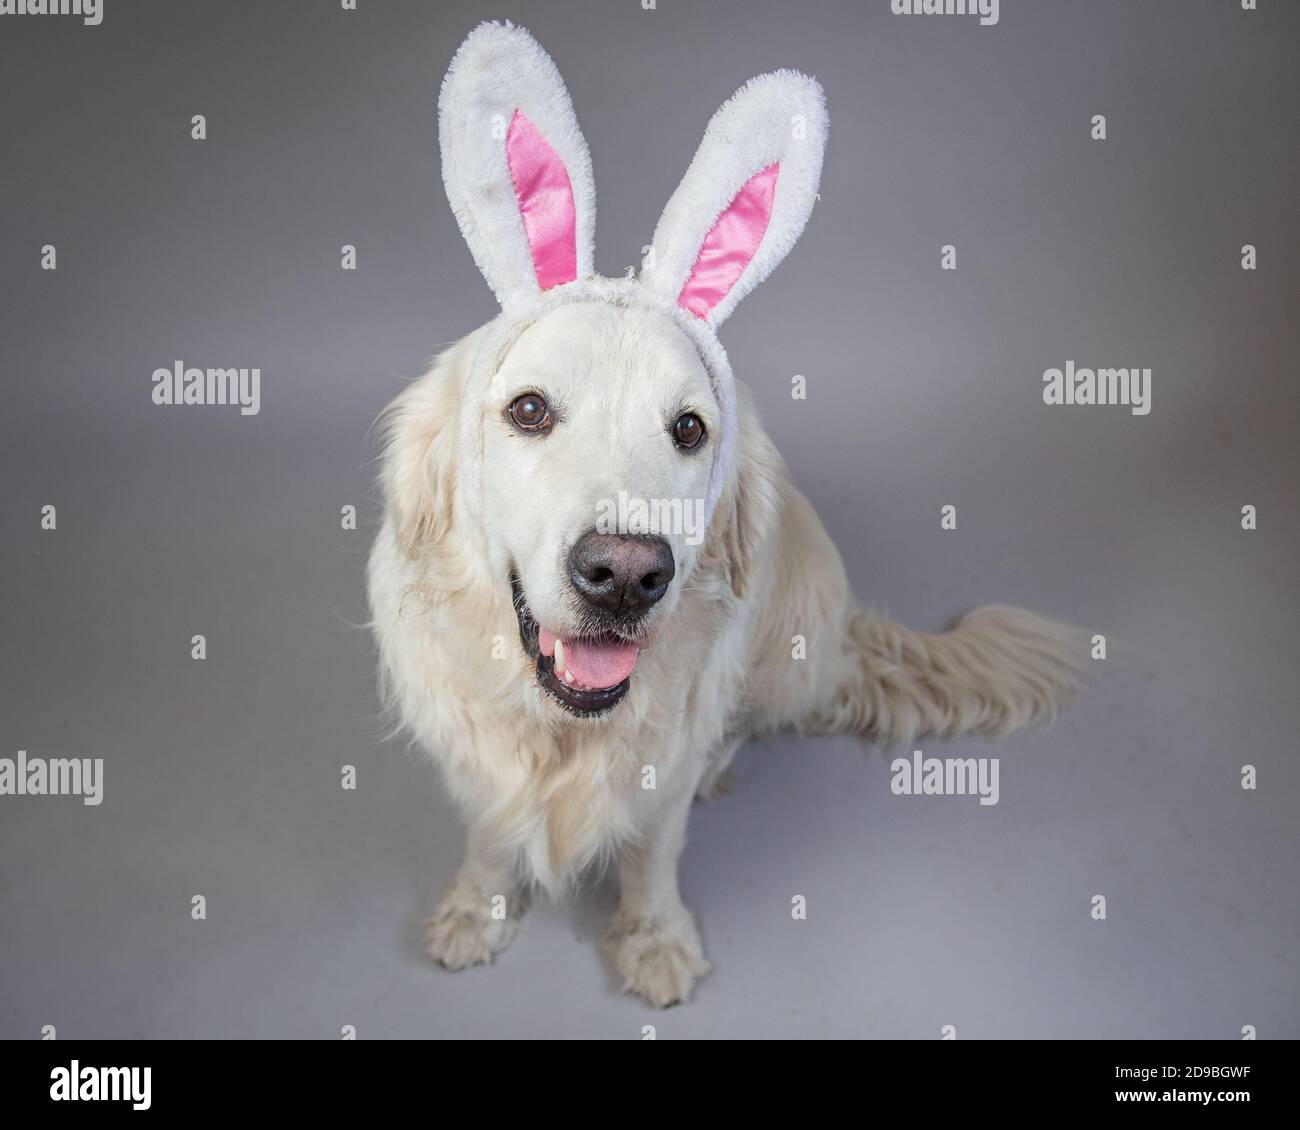 Portrait of an English cream golden retriever wearing bunny ears Stock Photo